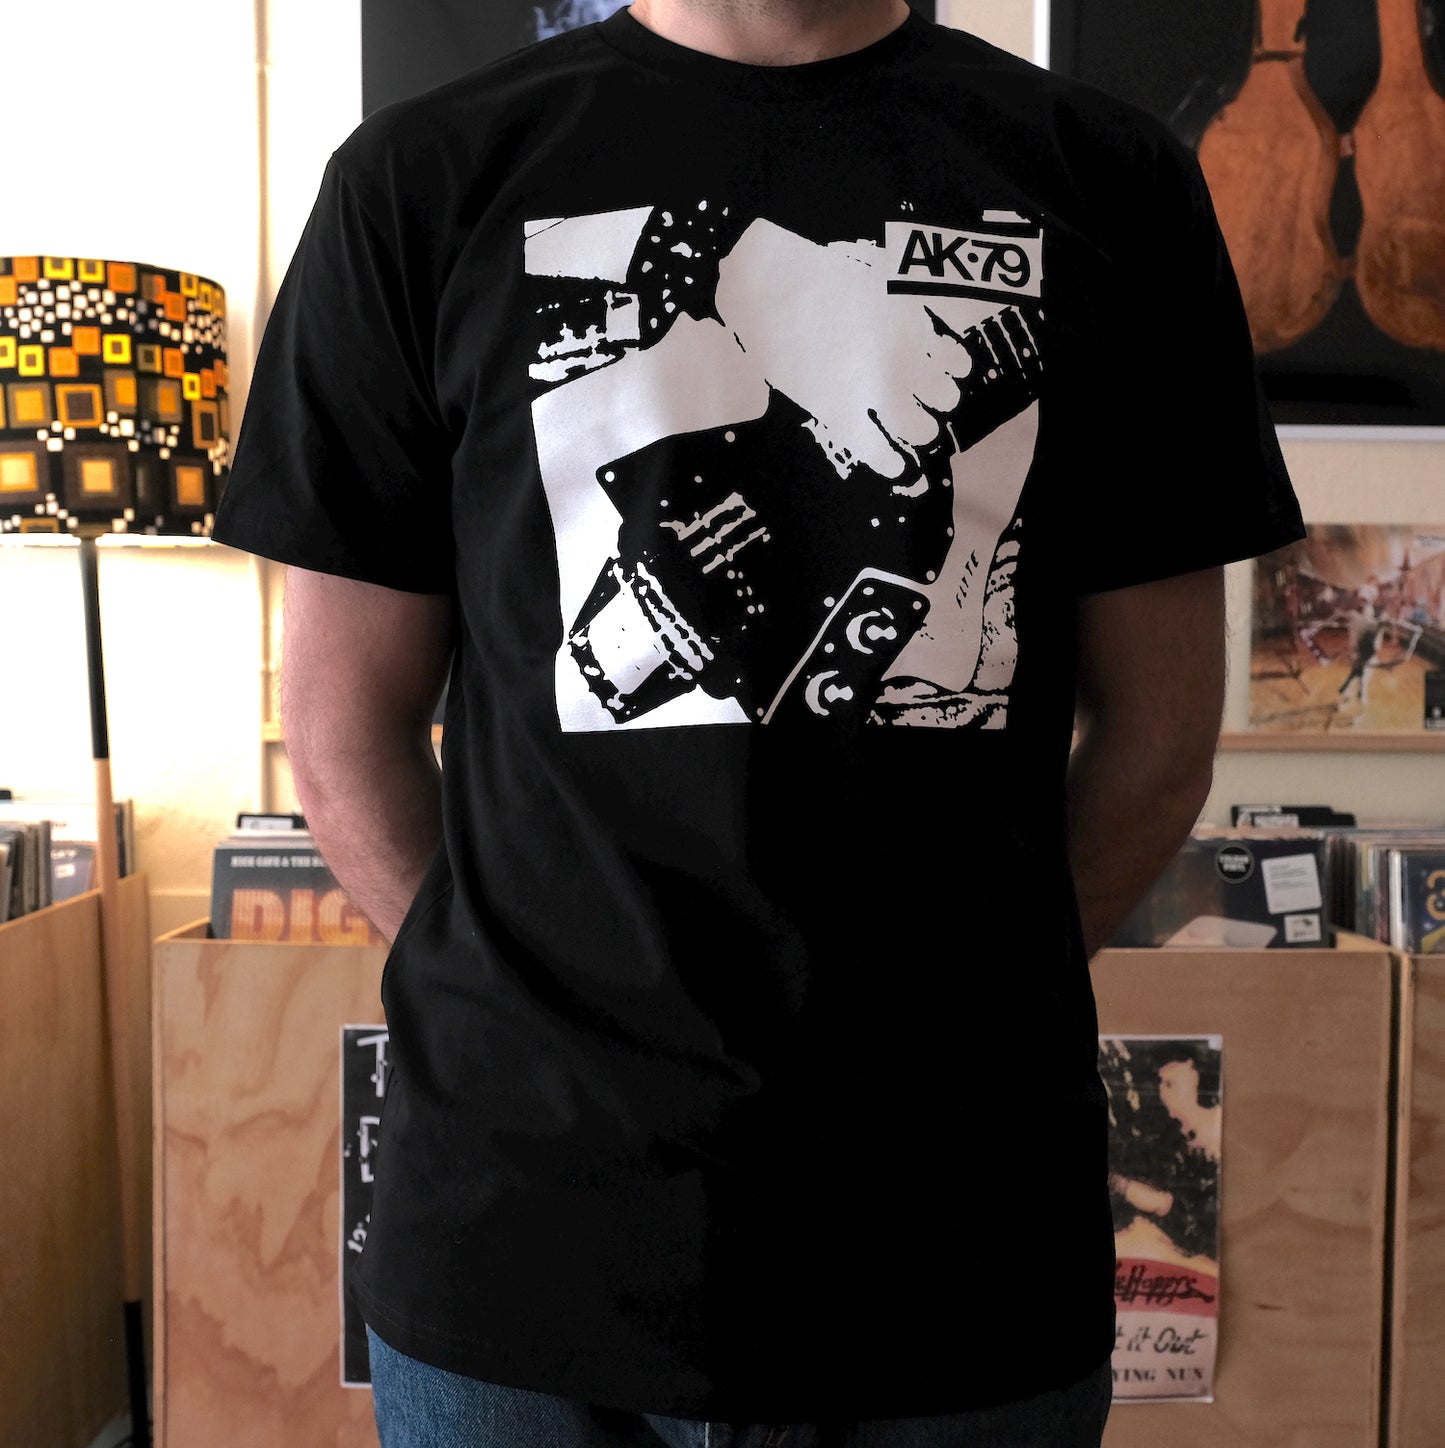 
                  
                    AK79 Punk Rock T-Shirt (Black) I NZ Music & Band Merch
                  
                